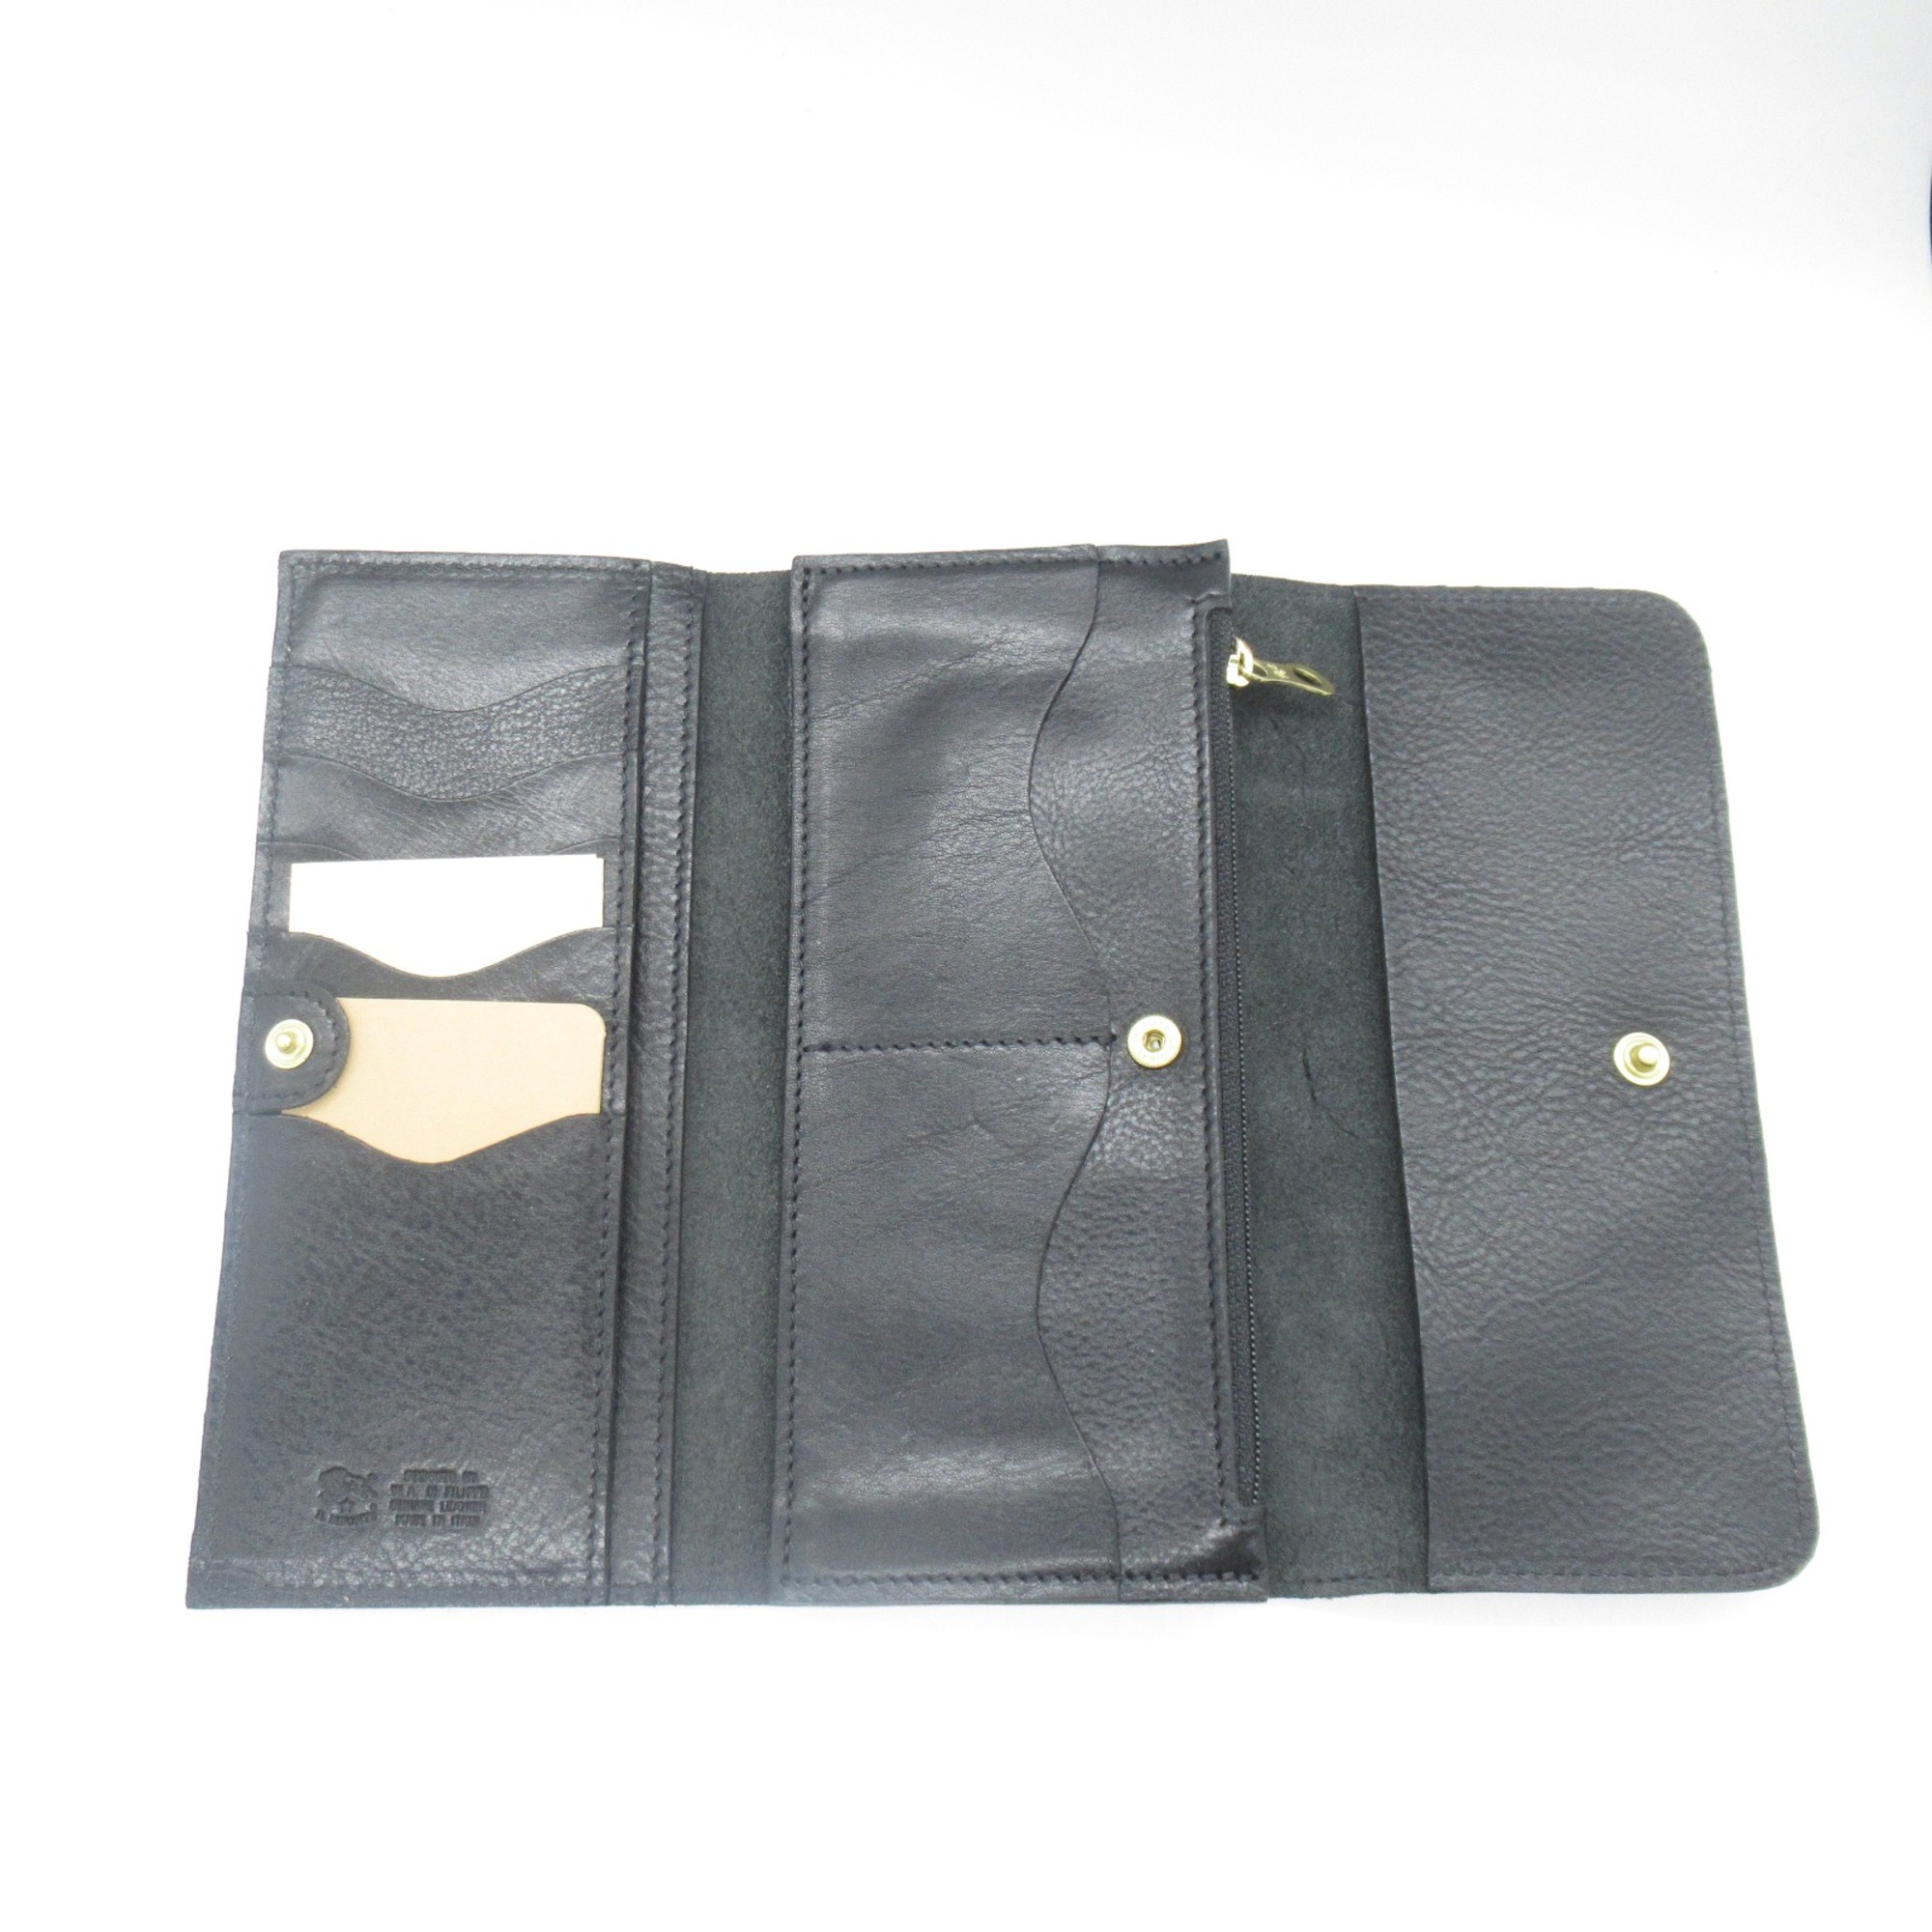 IL BISONTE Tri-fold long wallet Black leather SCW009BK110